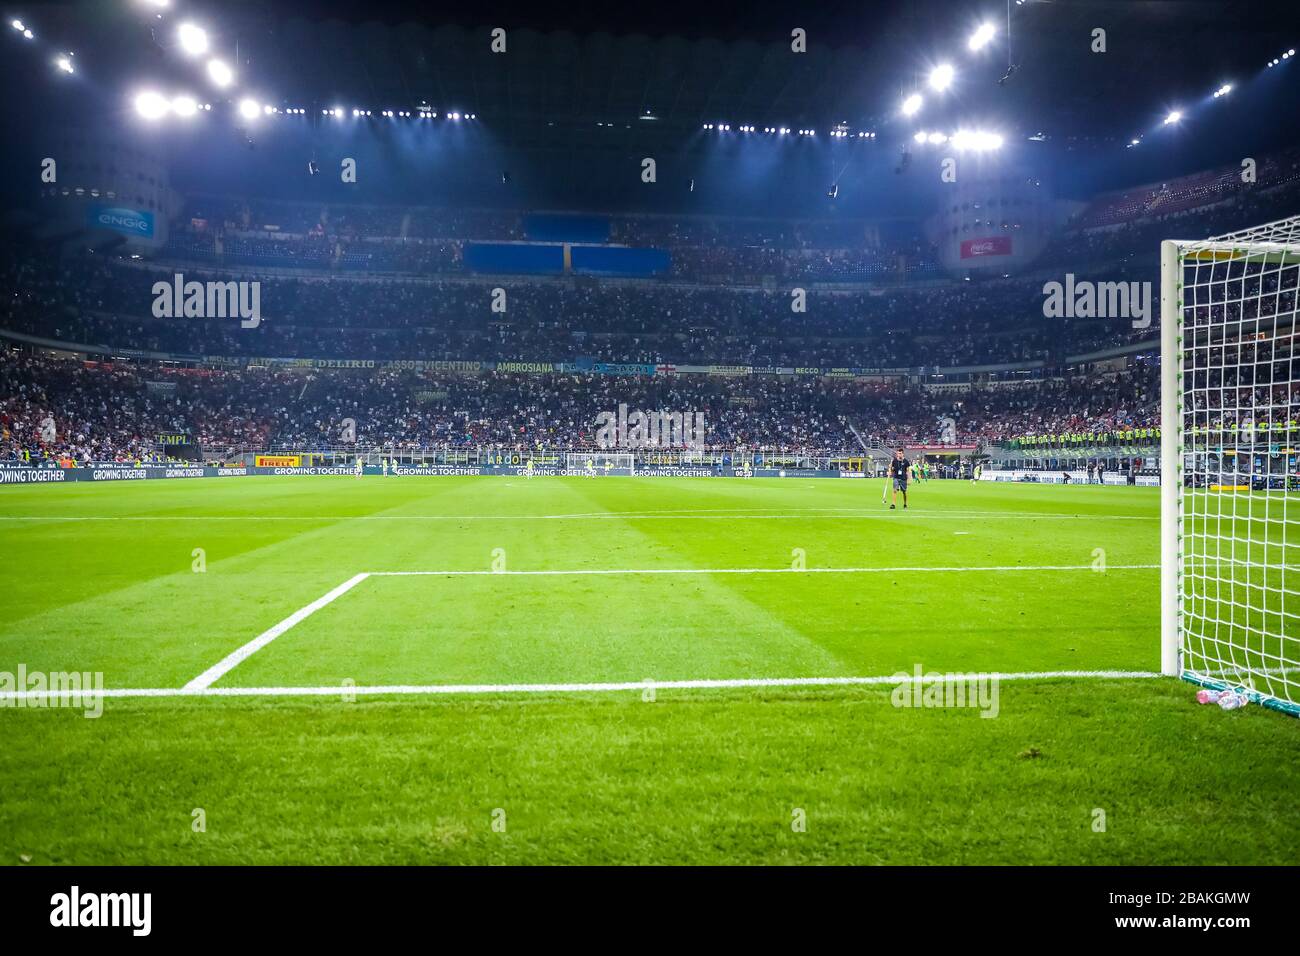 San Siro Stadium during soccer season 2019/20 symbolic images - Photo credit Fabrizio Carabelli /LM/ Stock Photo